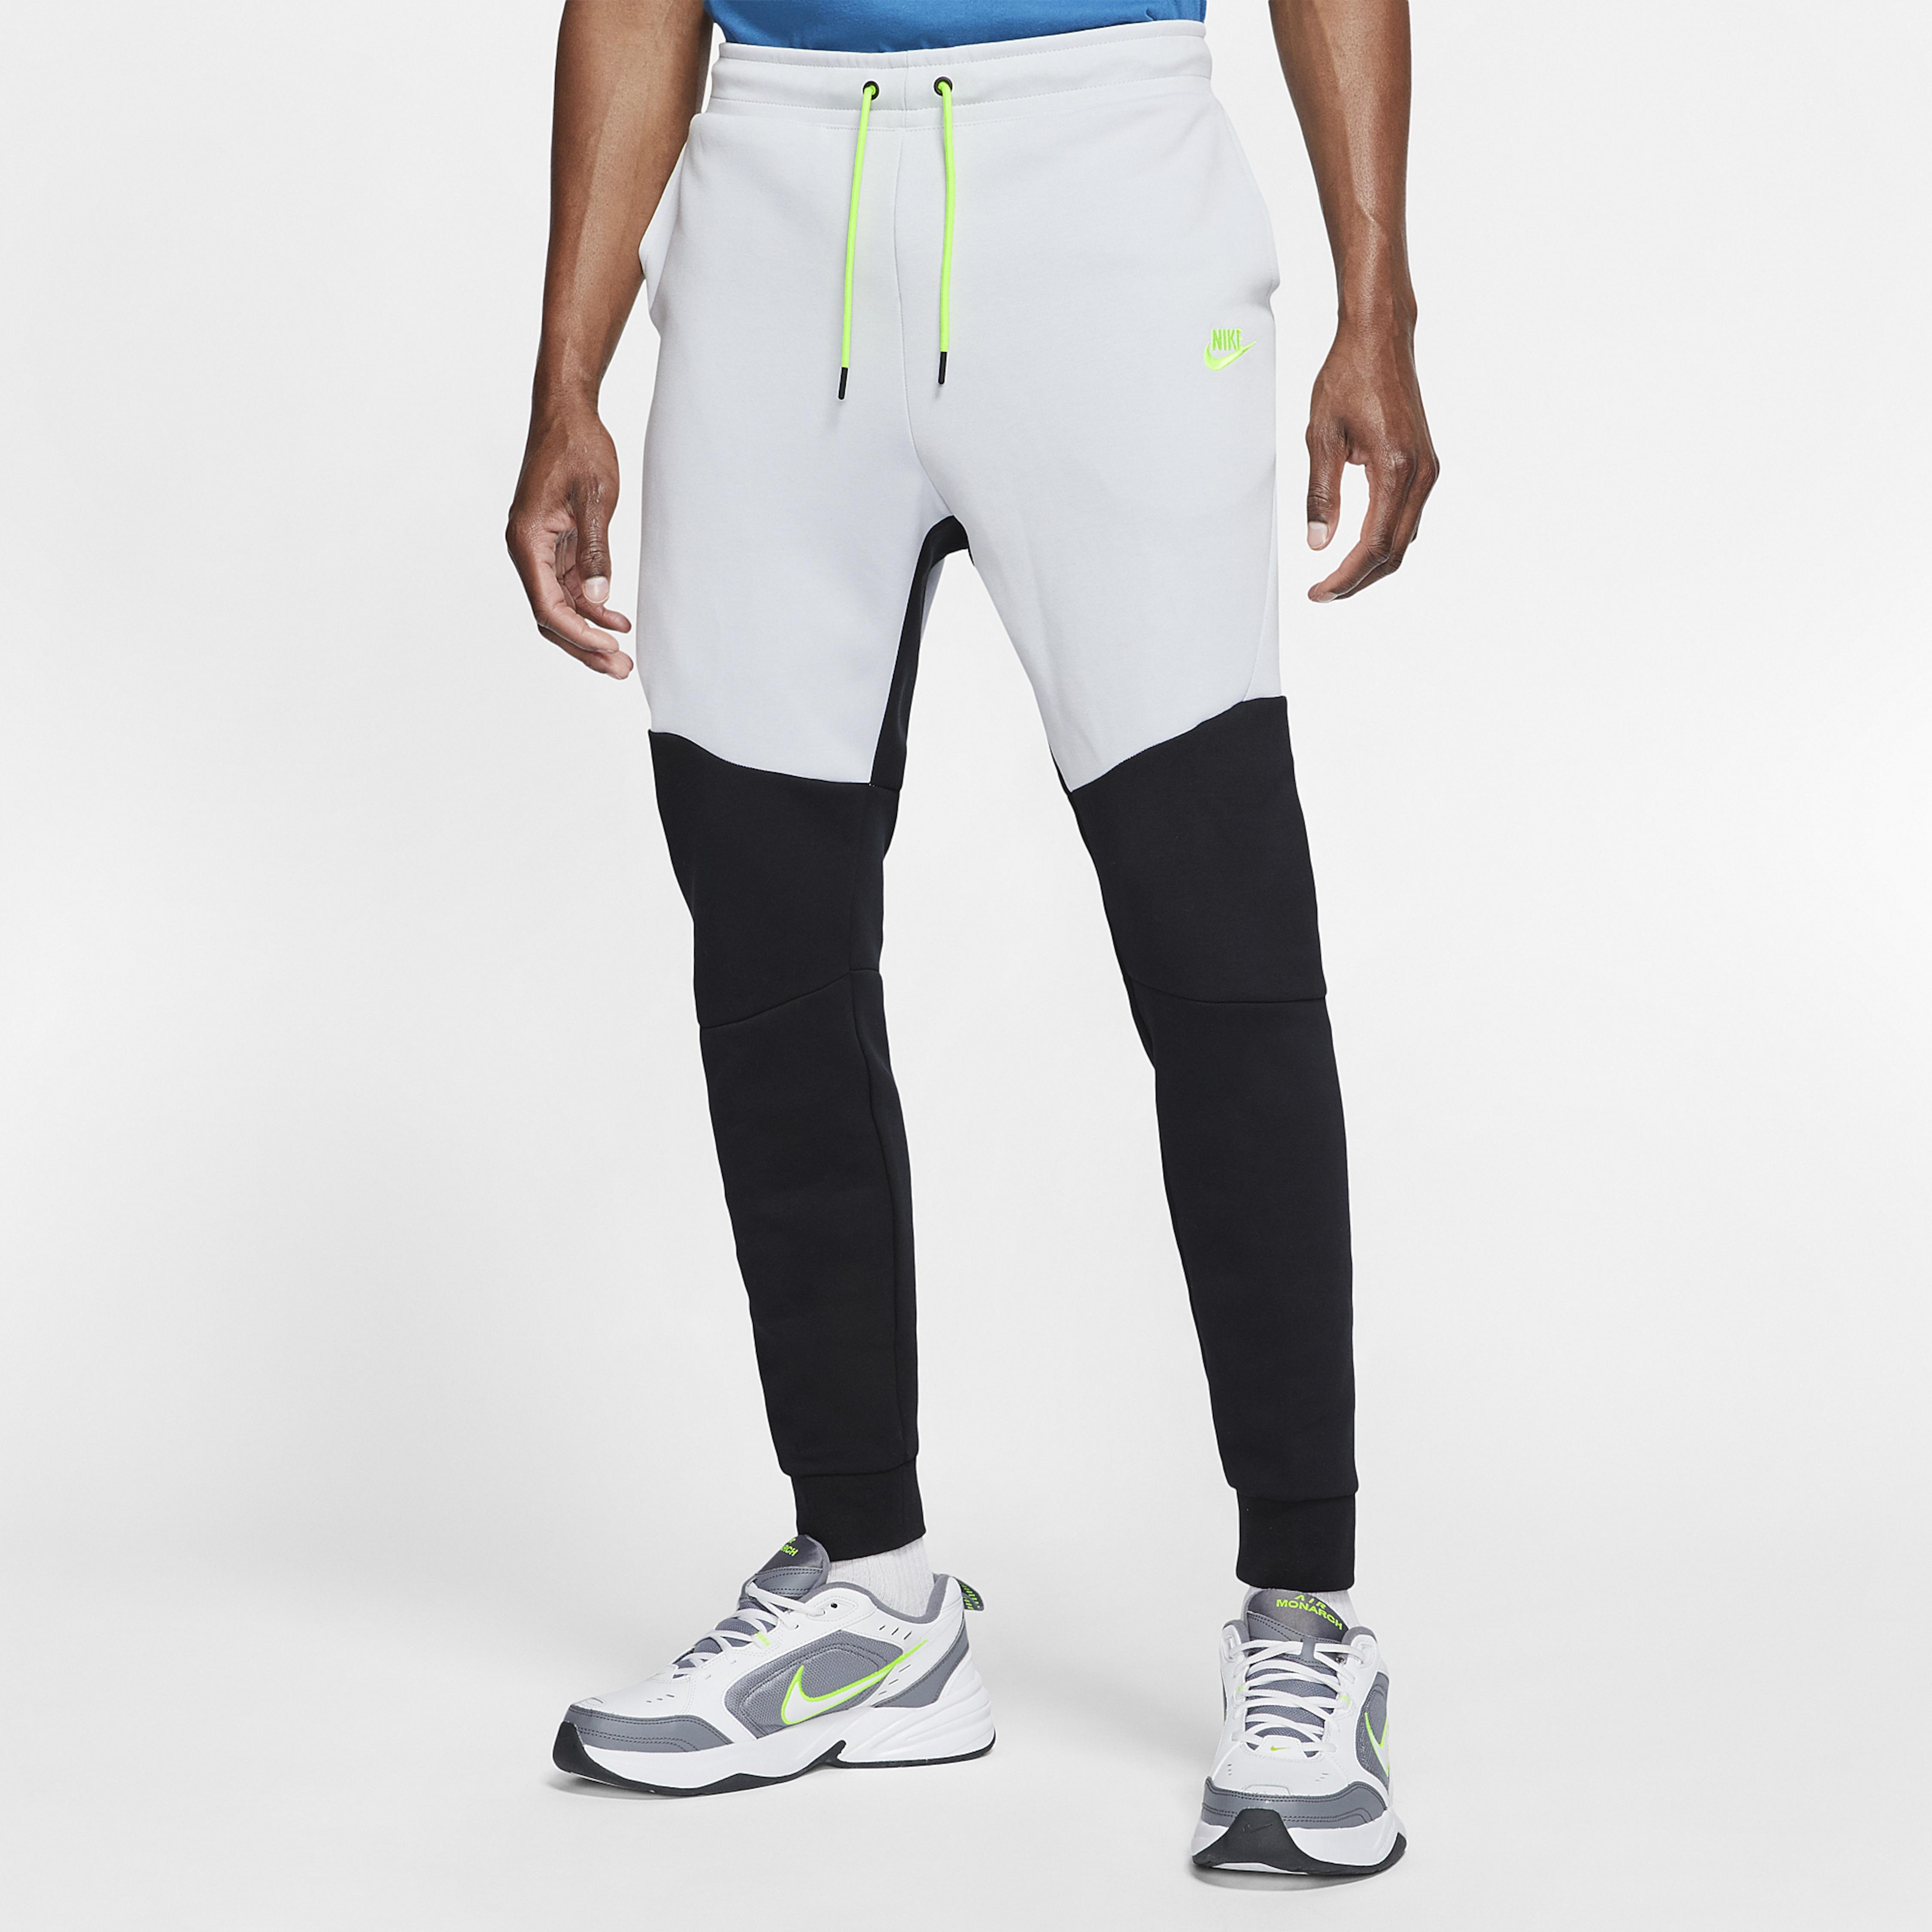 Nike Catching Air Tech Fleece Jogger Pant in Black / (Black) for Men - Lyst